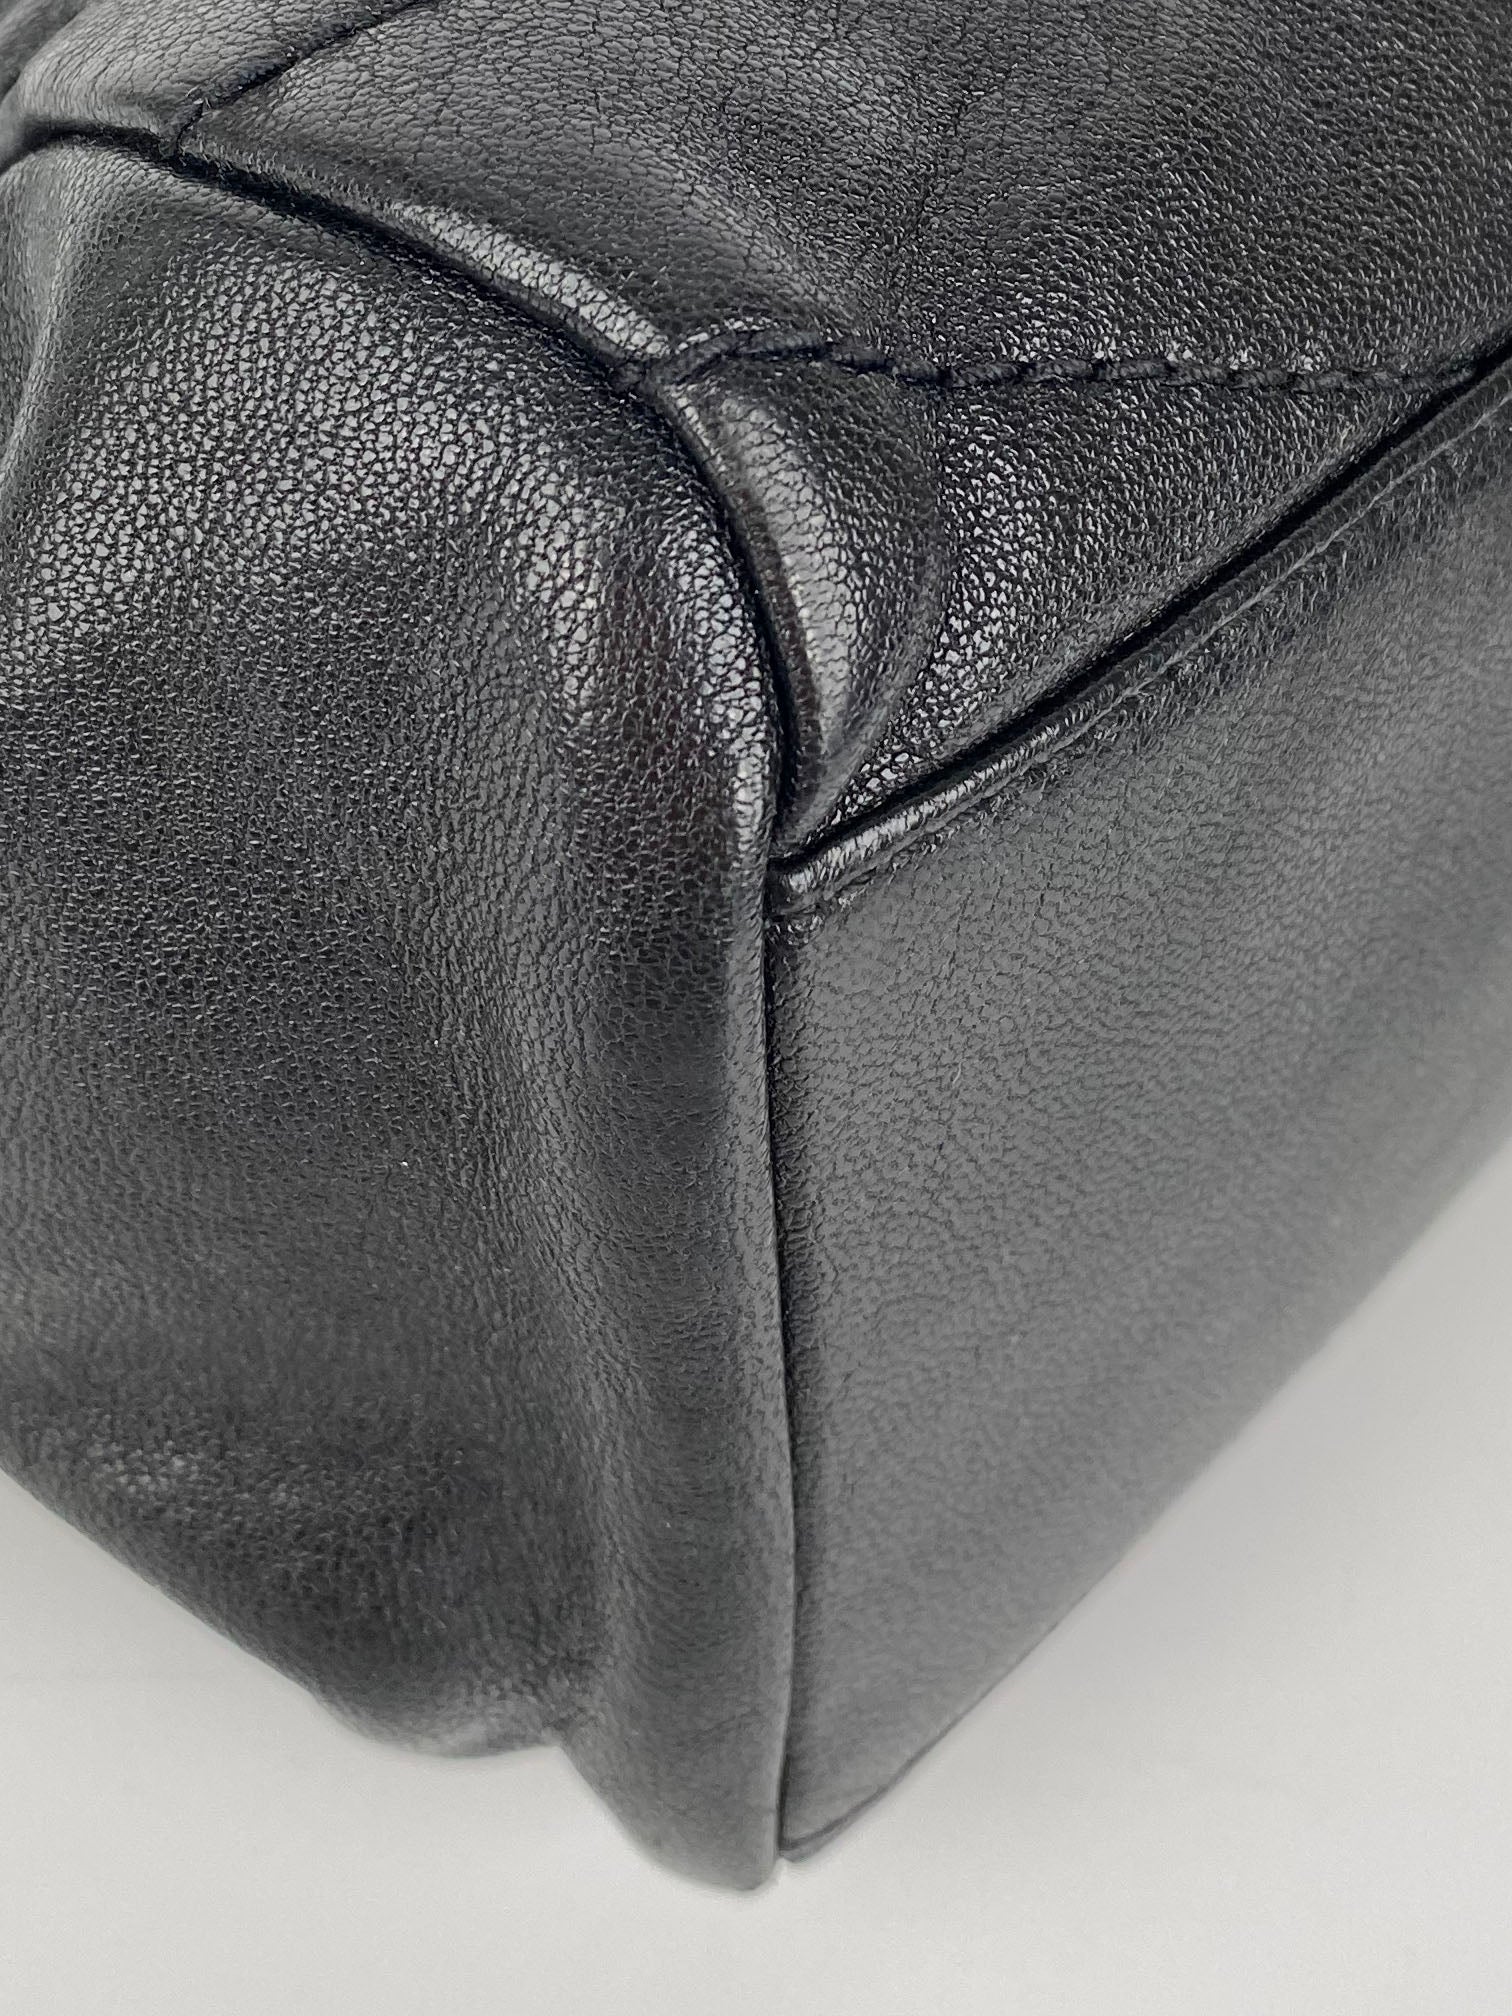 Saint Laurent Black Crinkled Leather Nolita Bag